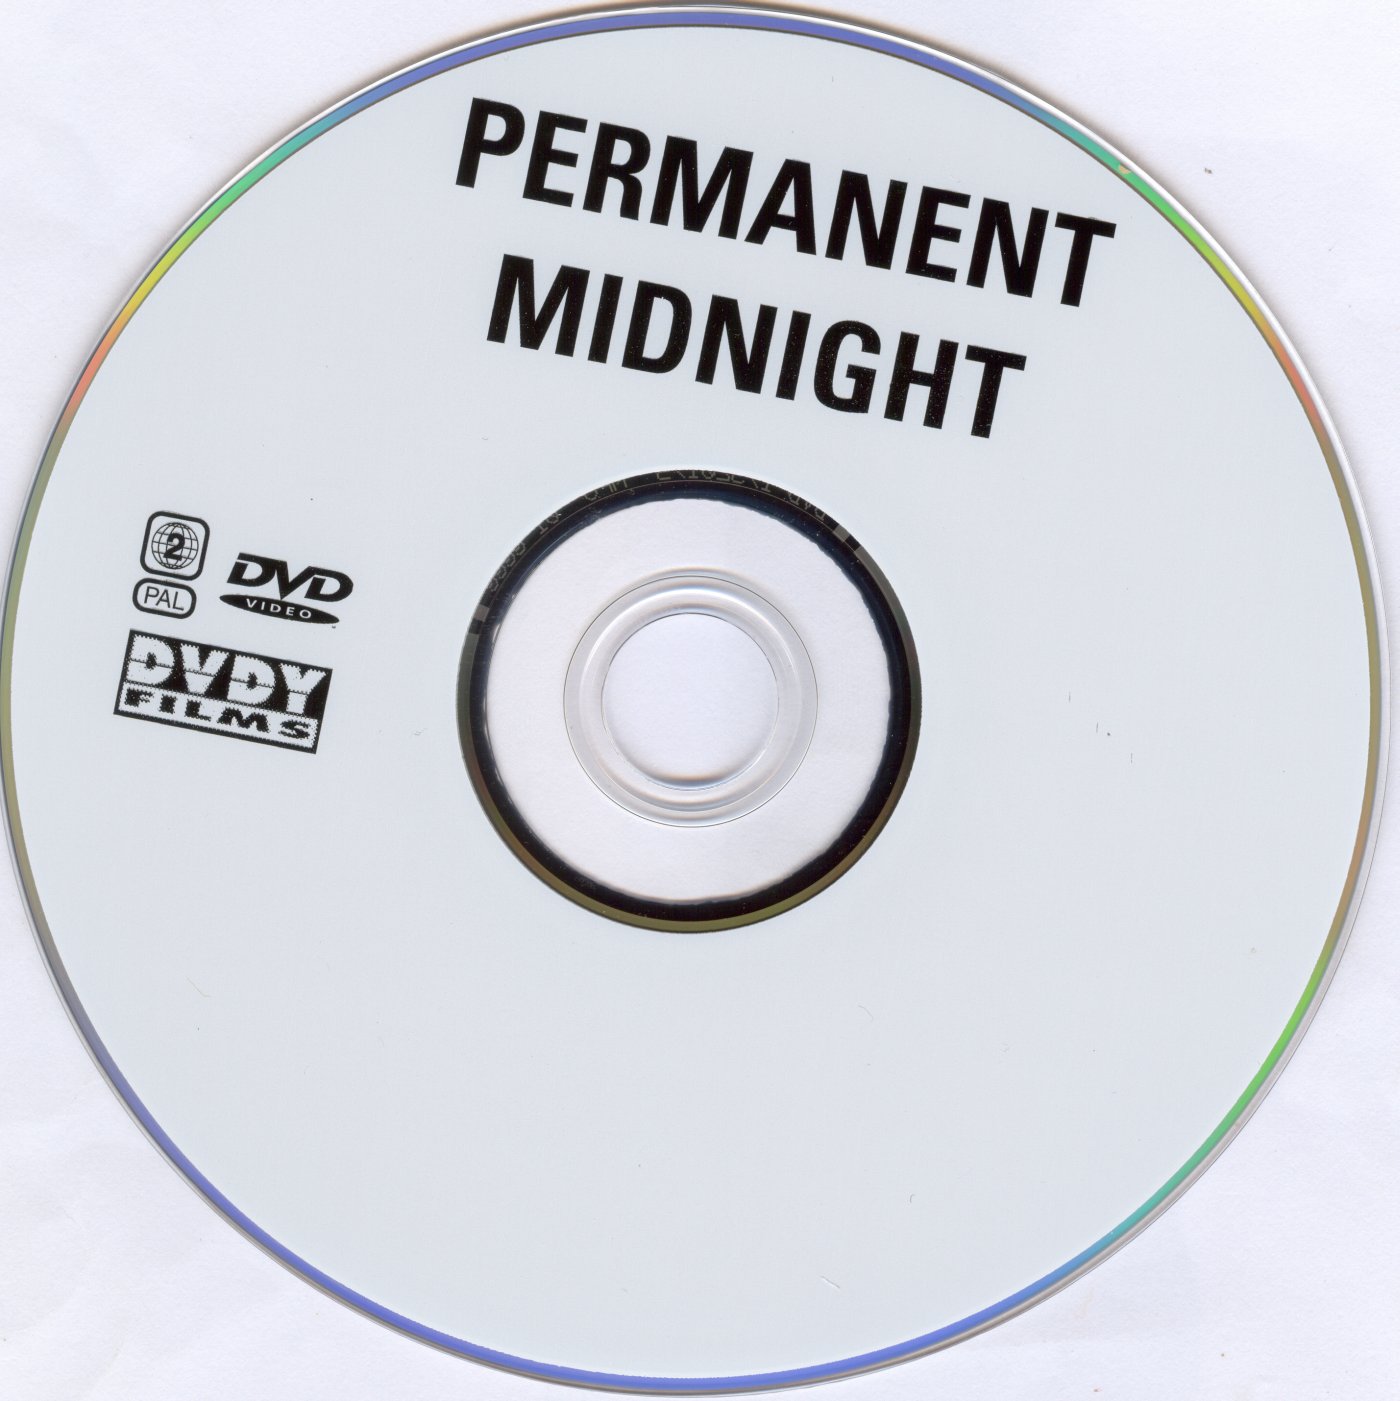 Permanent midnight